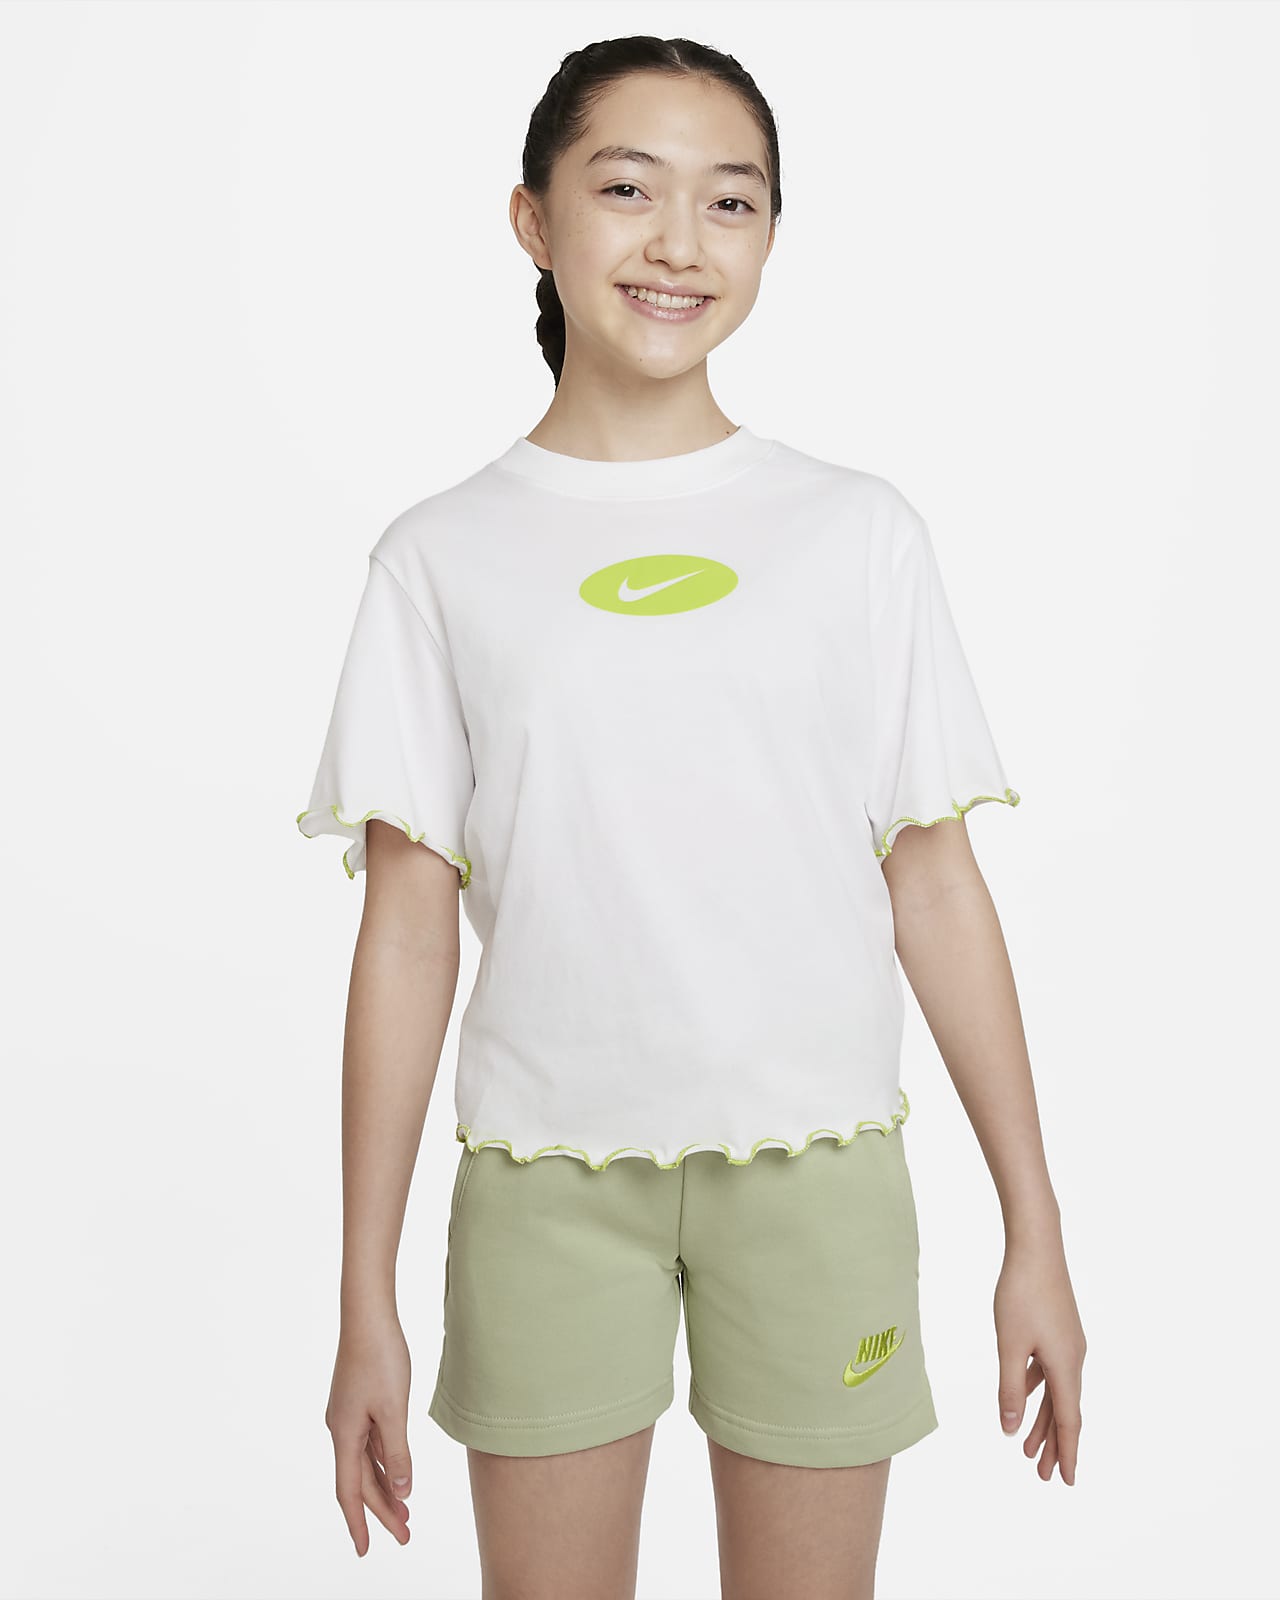 Nike Sportswear Icon Clash Older Kids' (Girls') T-Shirt. Nike ID